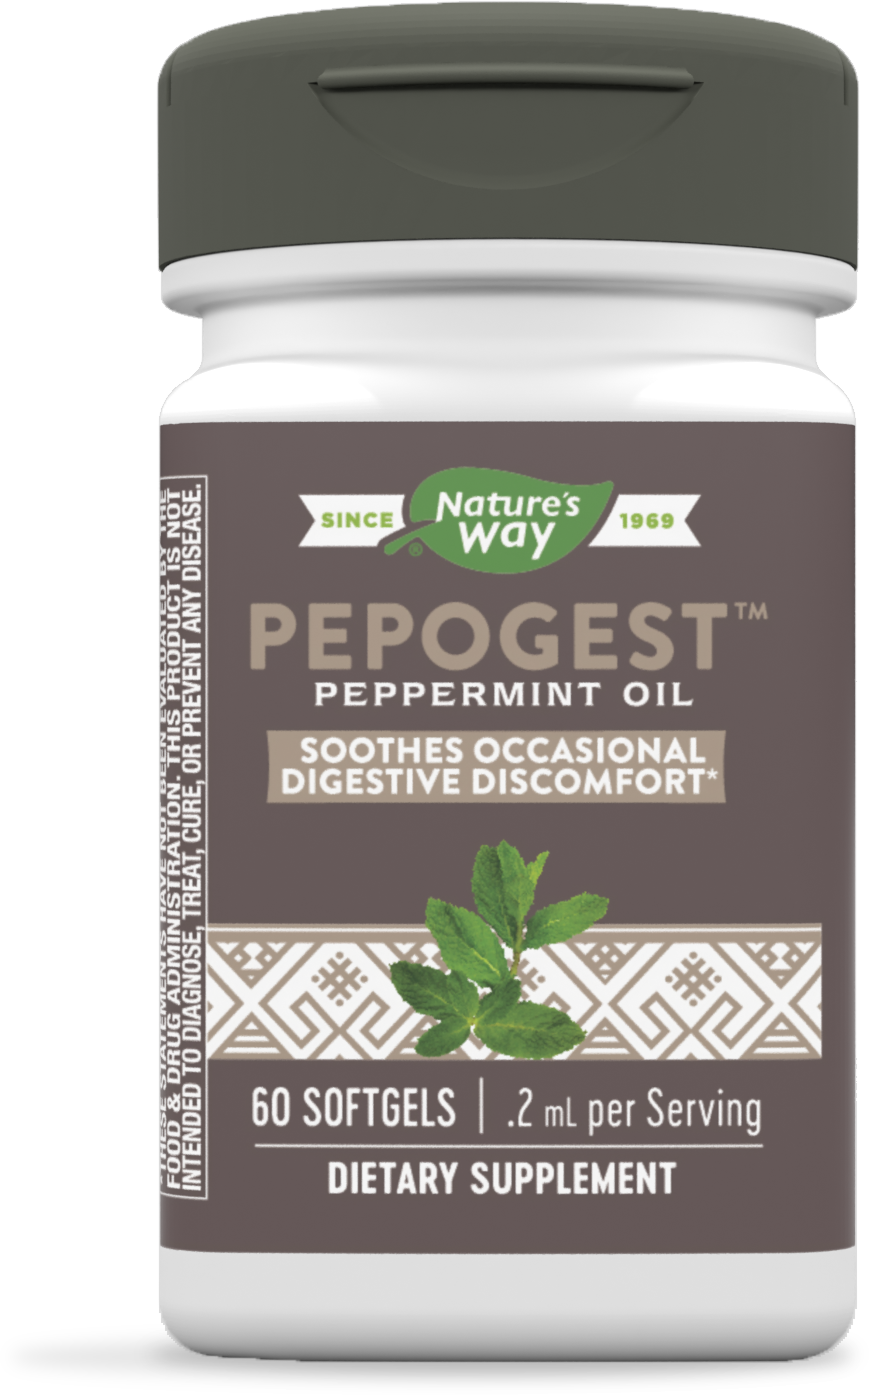 Pepogest (Peppermint Oil)